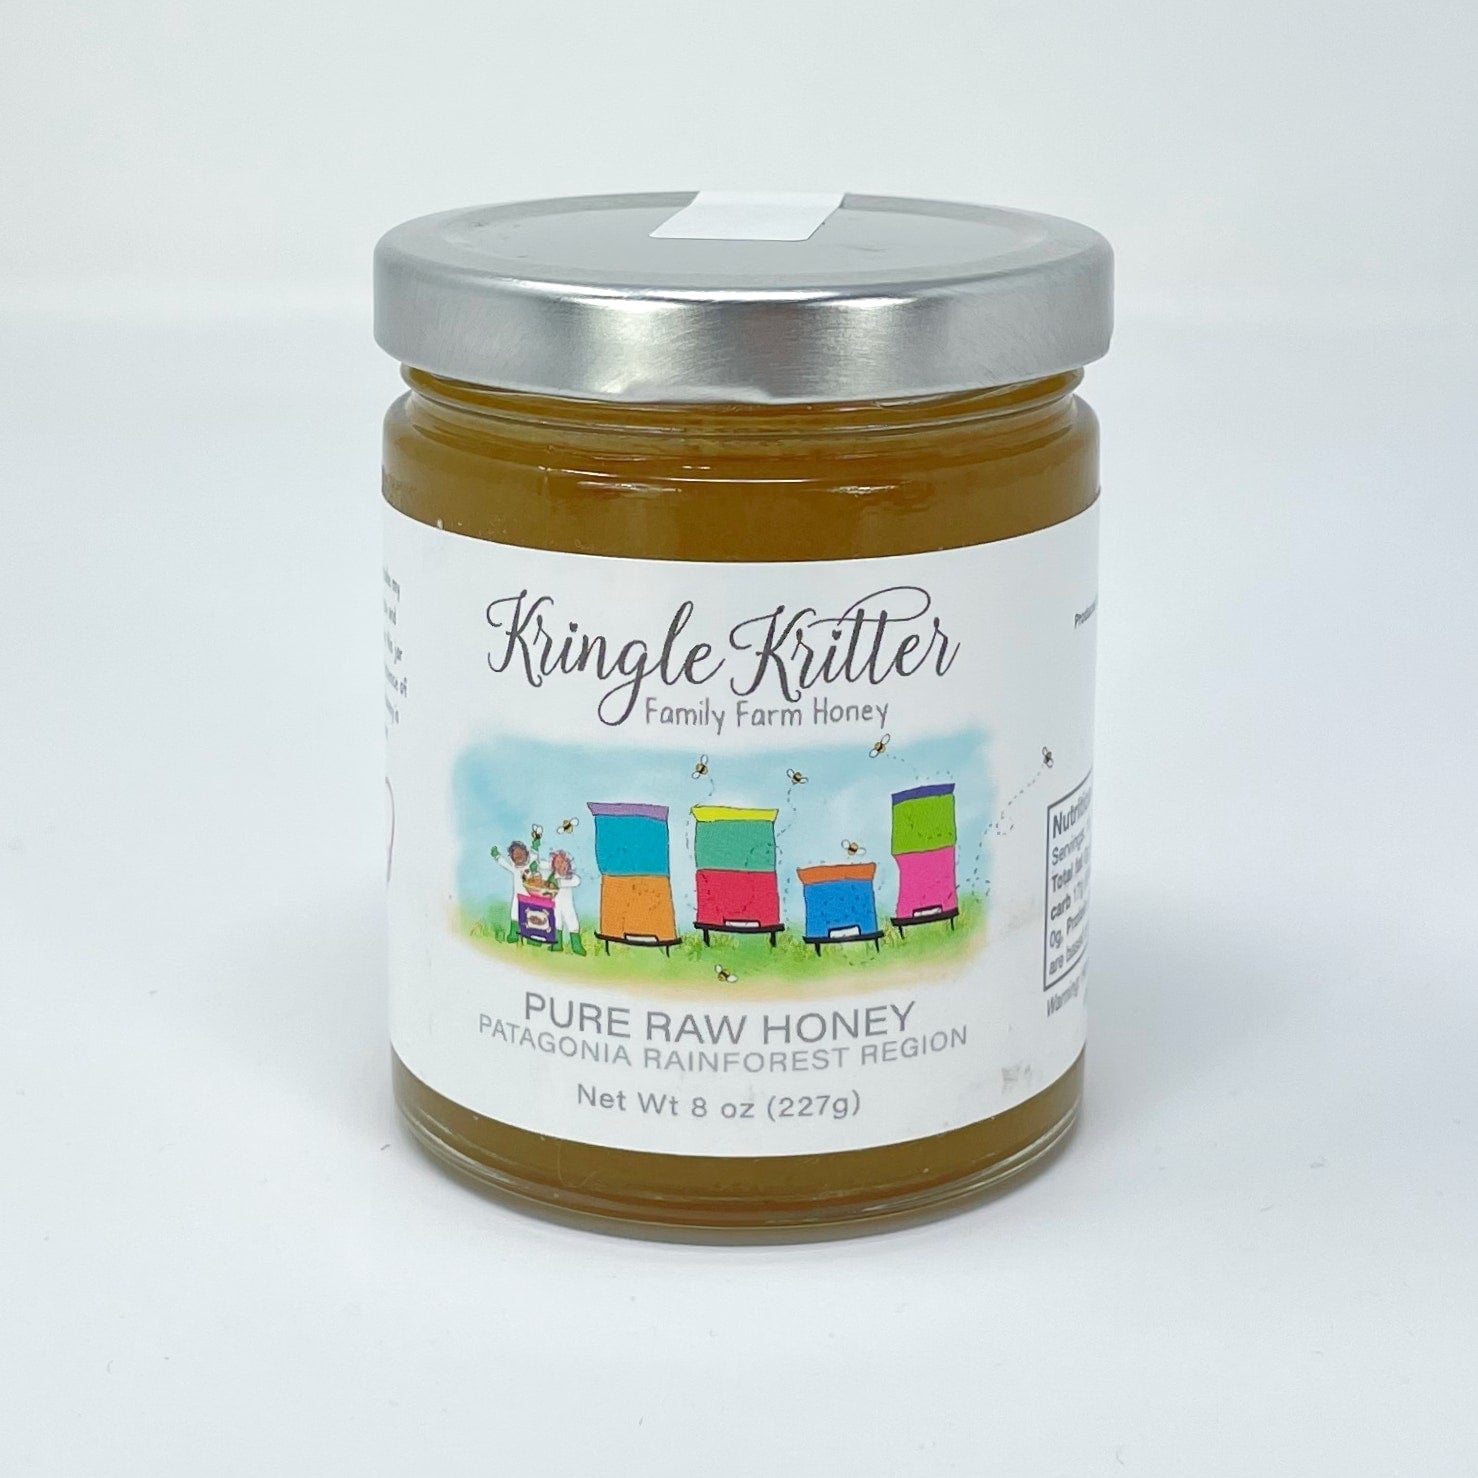 Kringle Kritter Family Farm Honey - Pure Raw Honey - Patagonia Rainforest Region